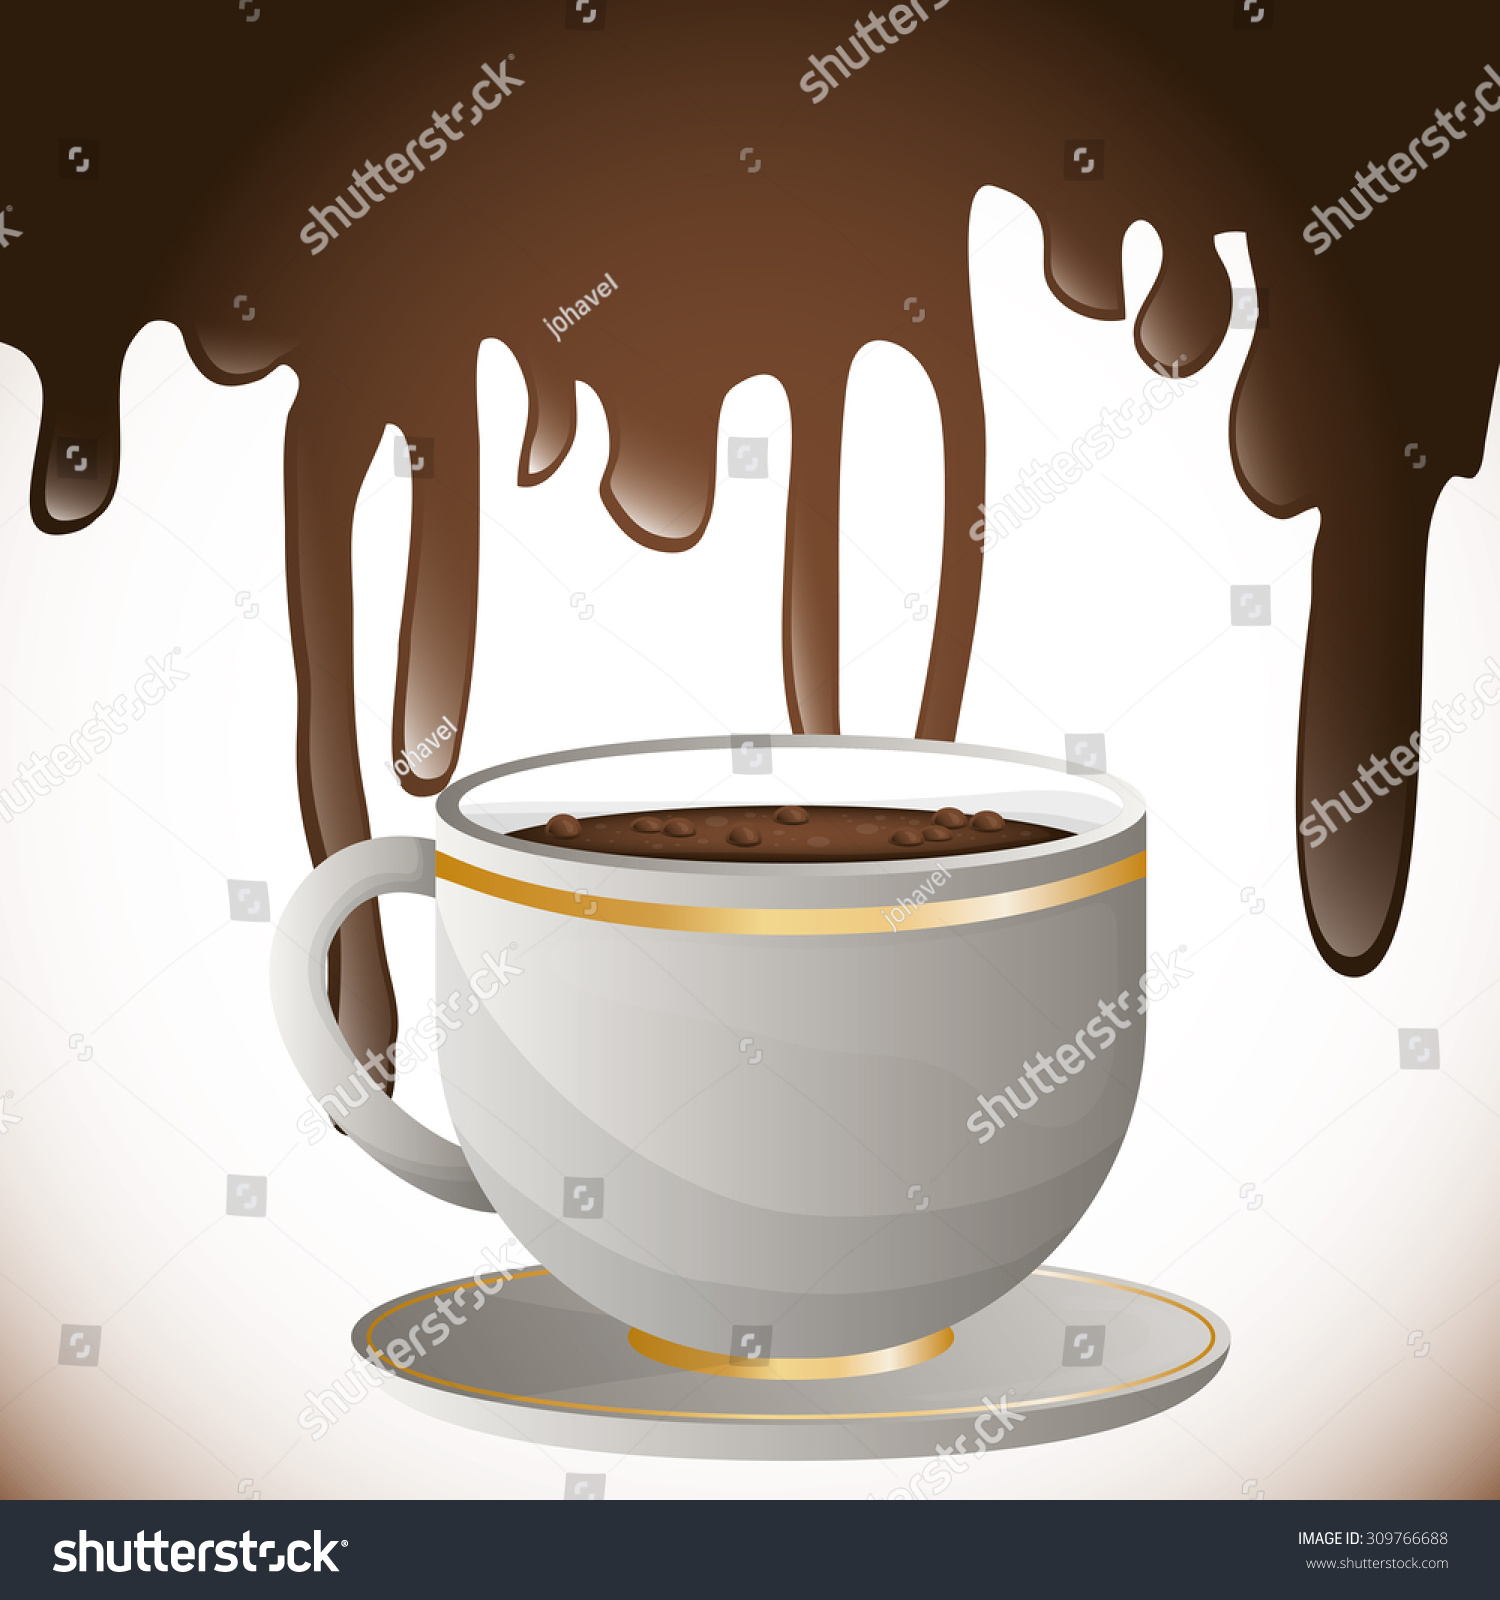 Coffee Splash Digital Design Vector Illustration Stock Vector ...